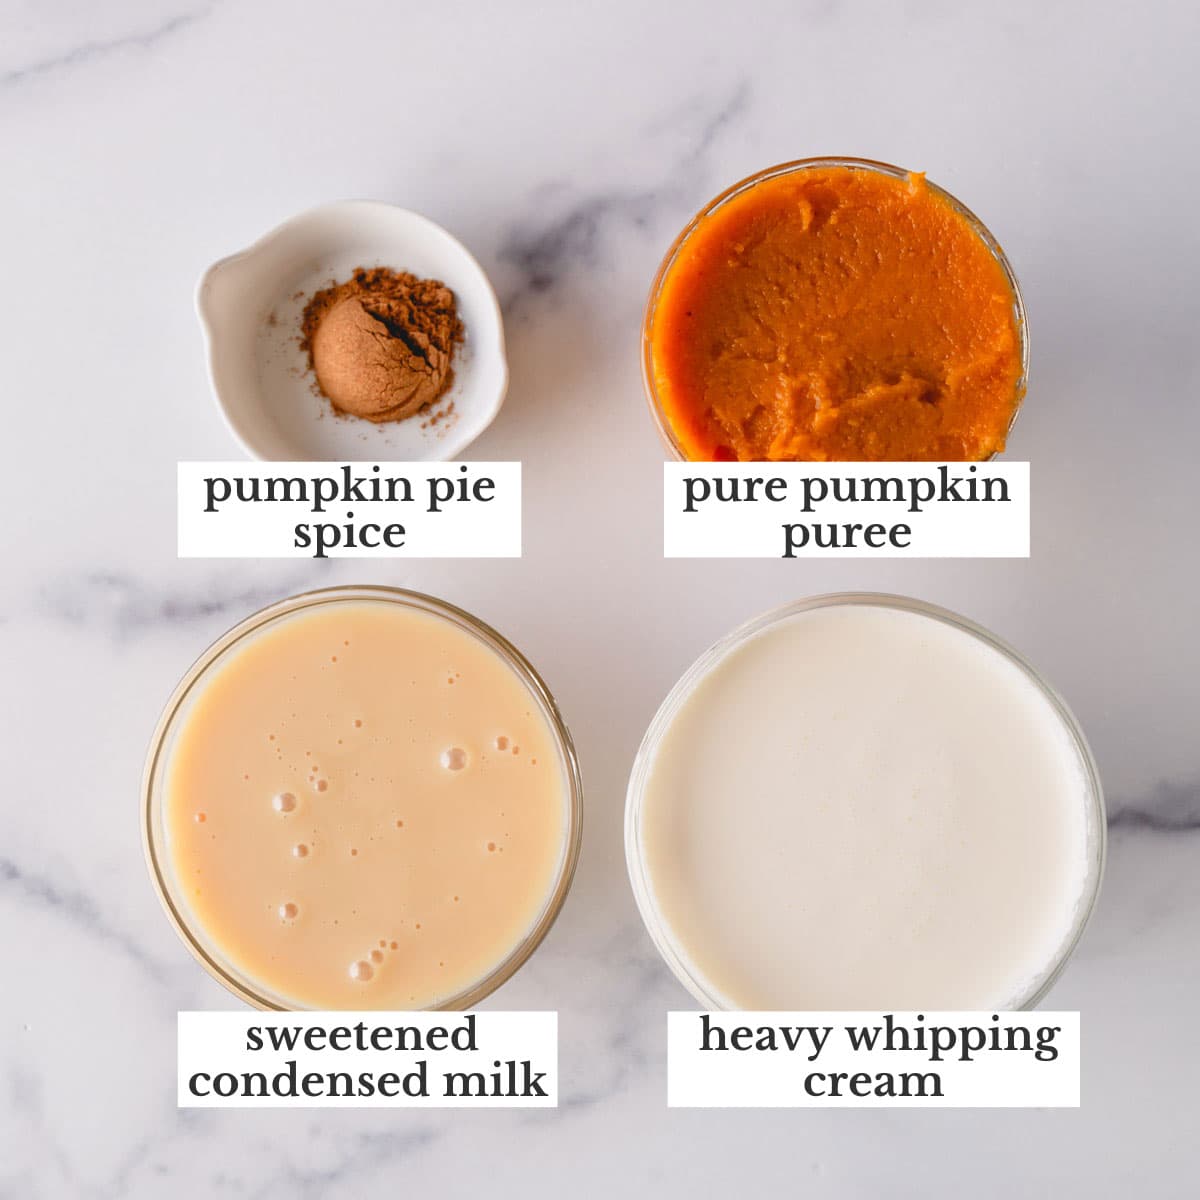 Pumpkin pie spice, pumpkin puree, sweetened condensed milk, and heavy whipping cream.